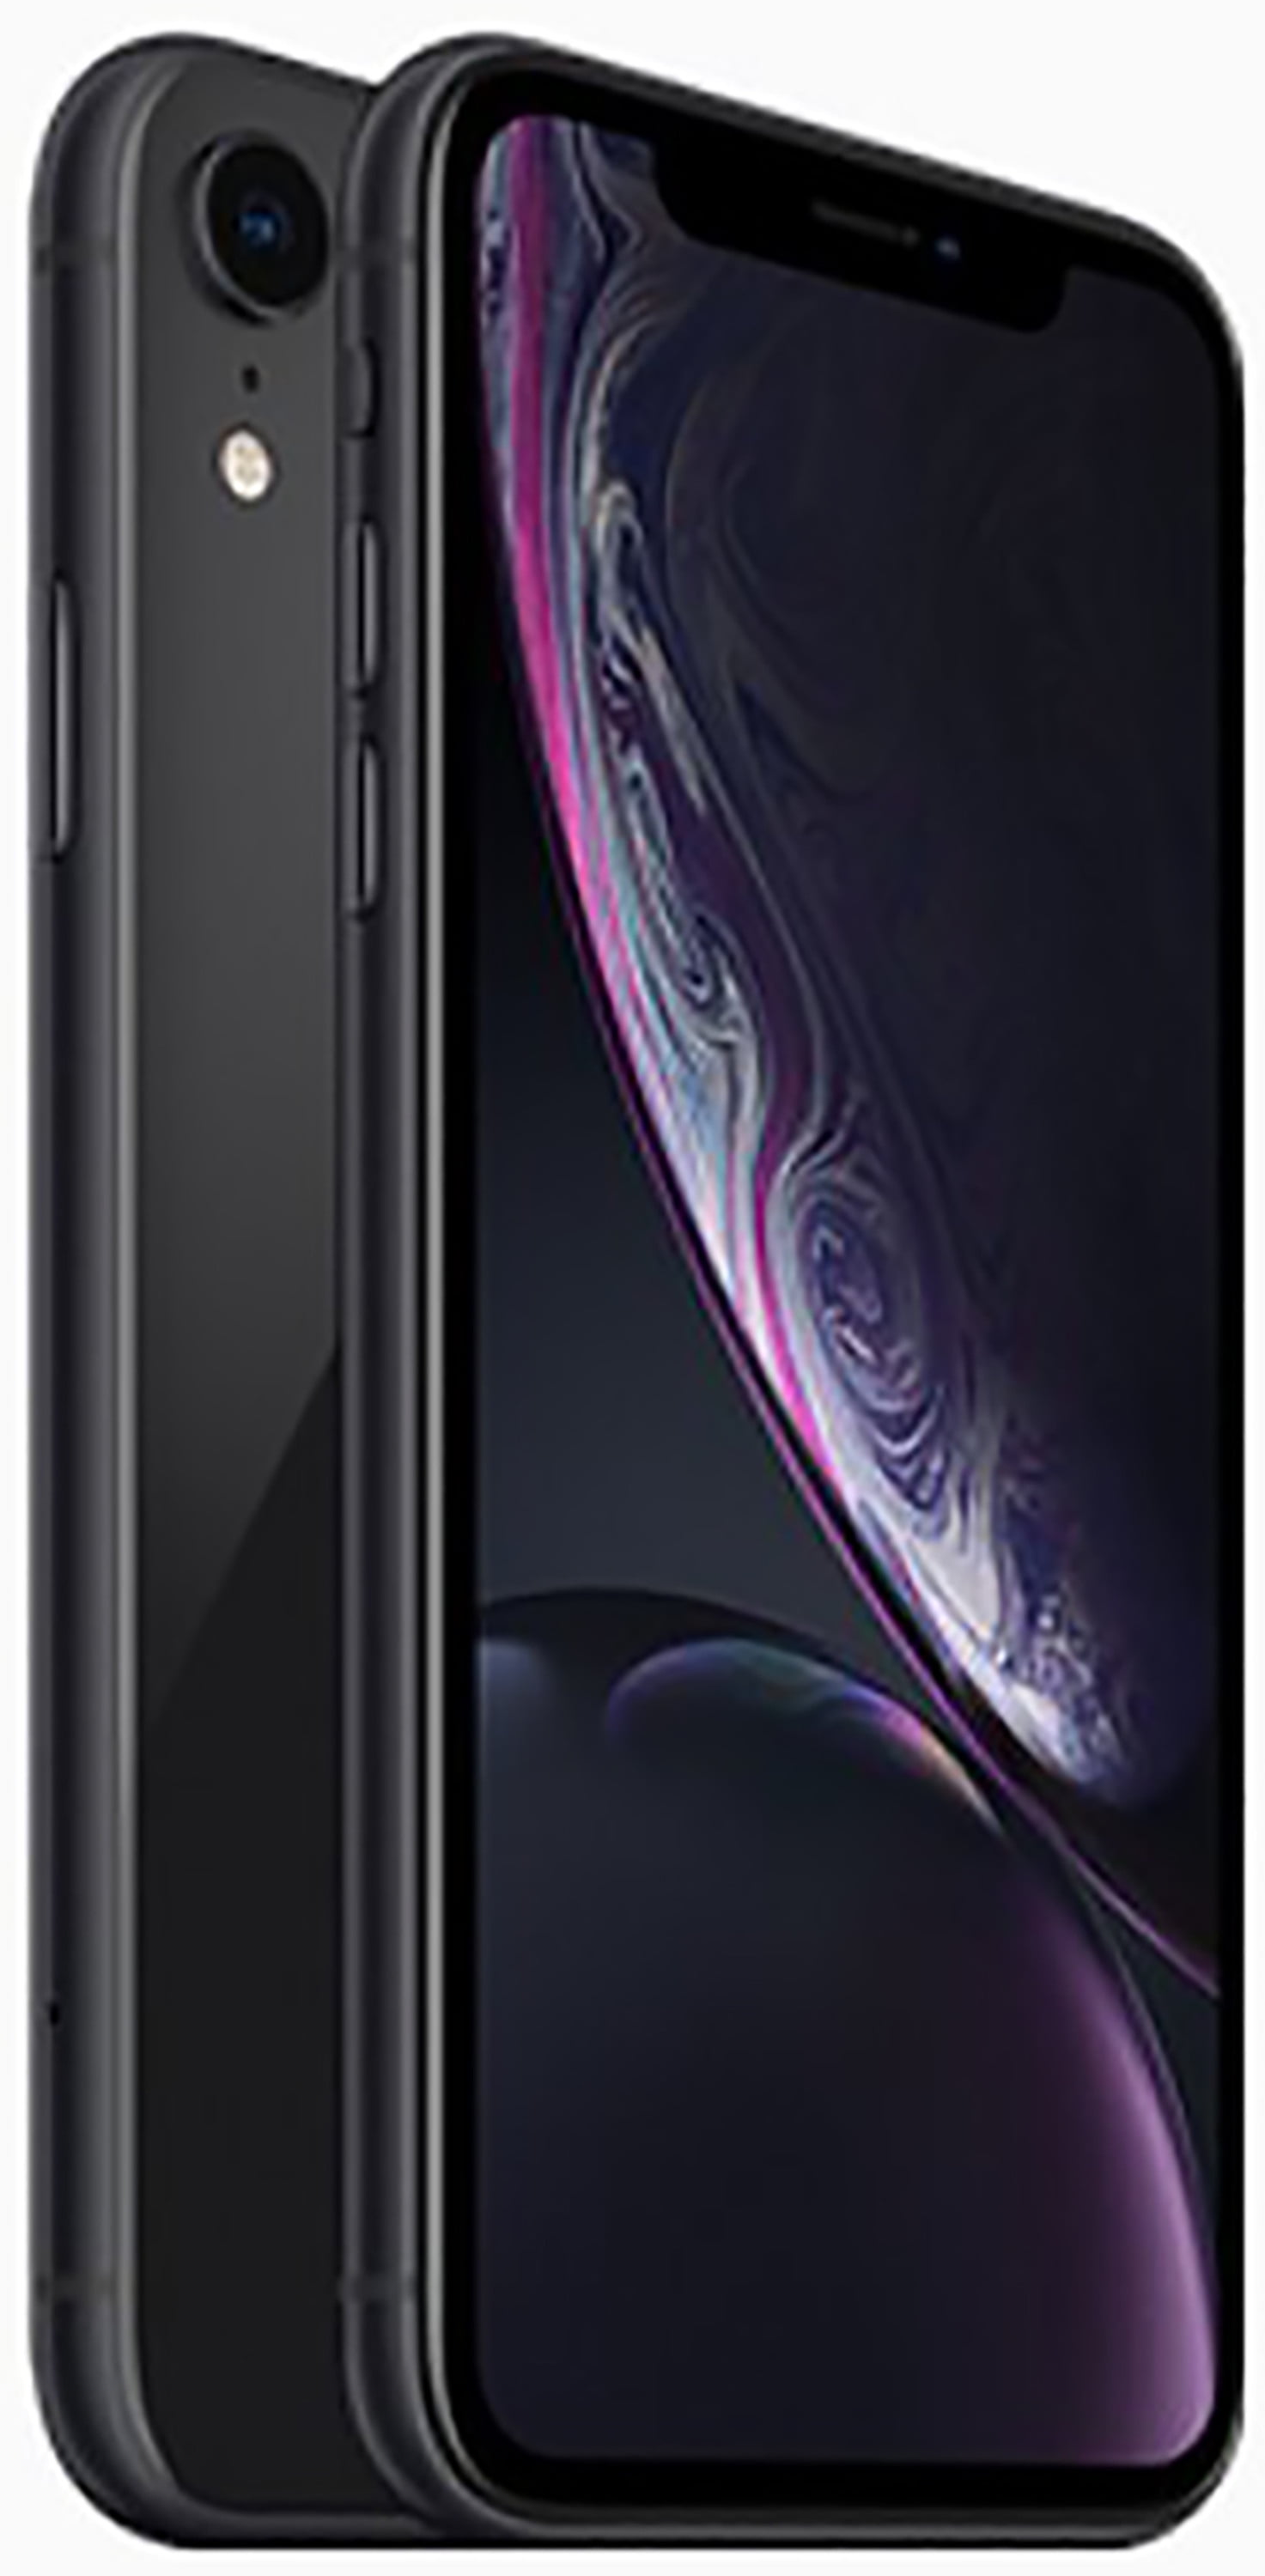 Apple iPhone XR 64GB Fully Unlocked (Verizon + Sprint + GSM Unlocked) -  Black (Fair Cosmetics, Fully Functional) + LiquidNano Screen Protector